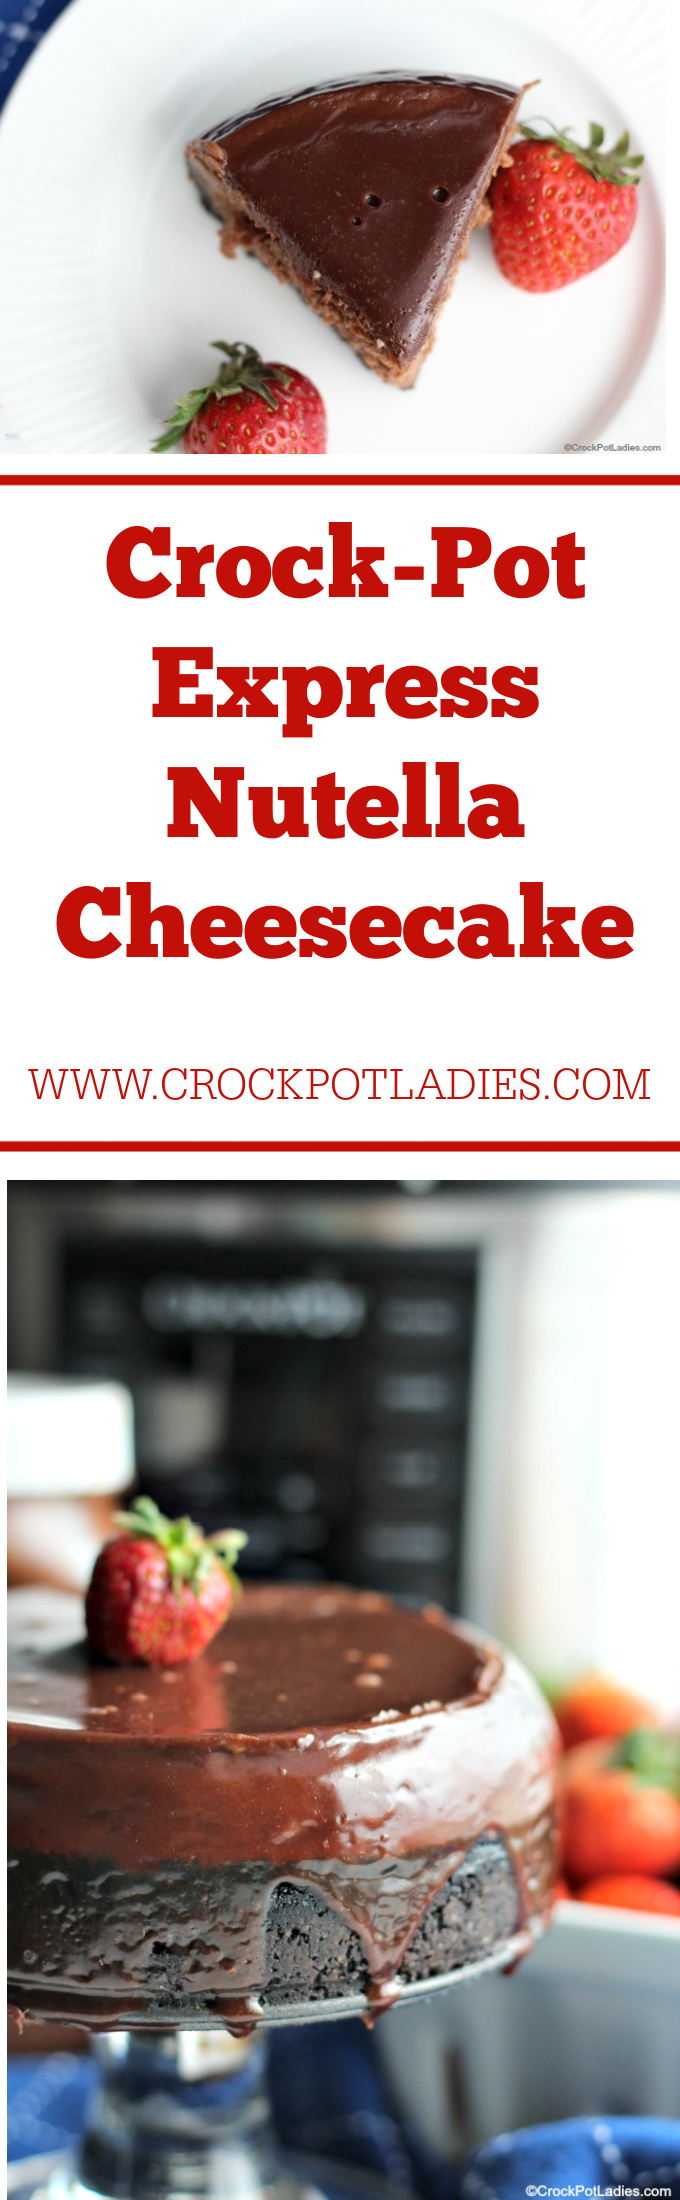 Crock-Pot Express Nutella Cheesecake